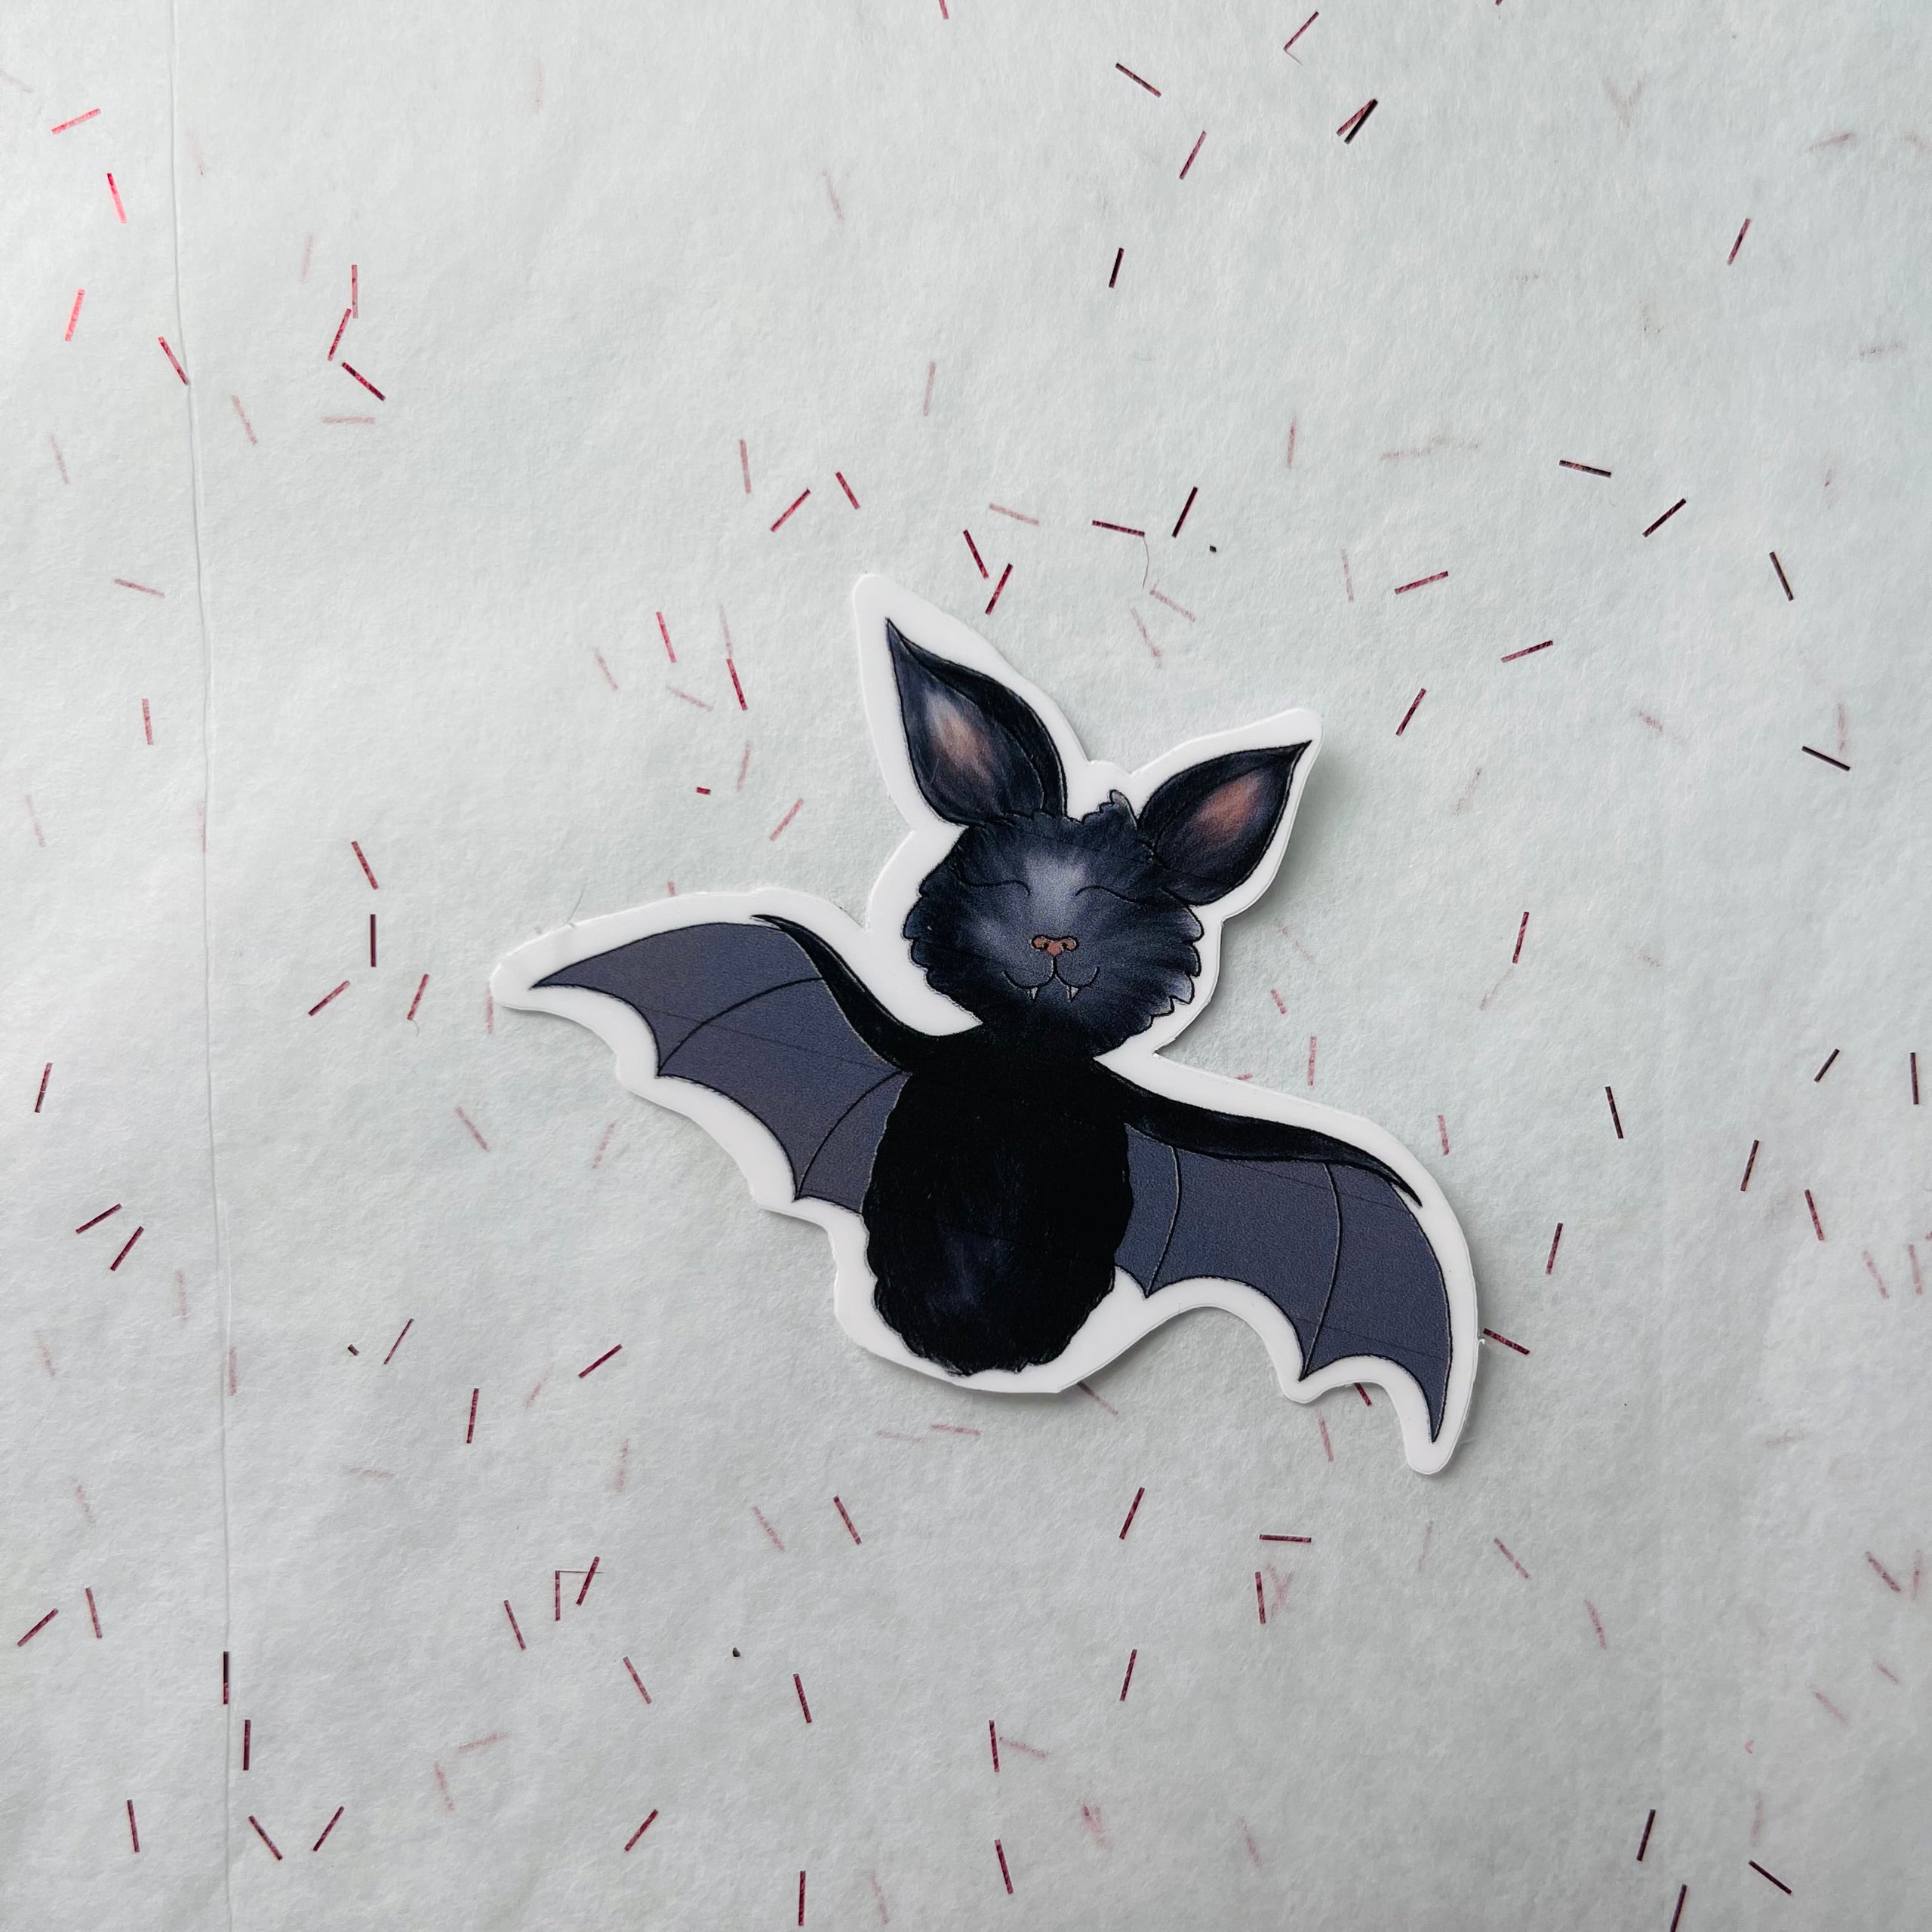 Spooky Puffy Stickers — Wawe Studio